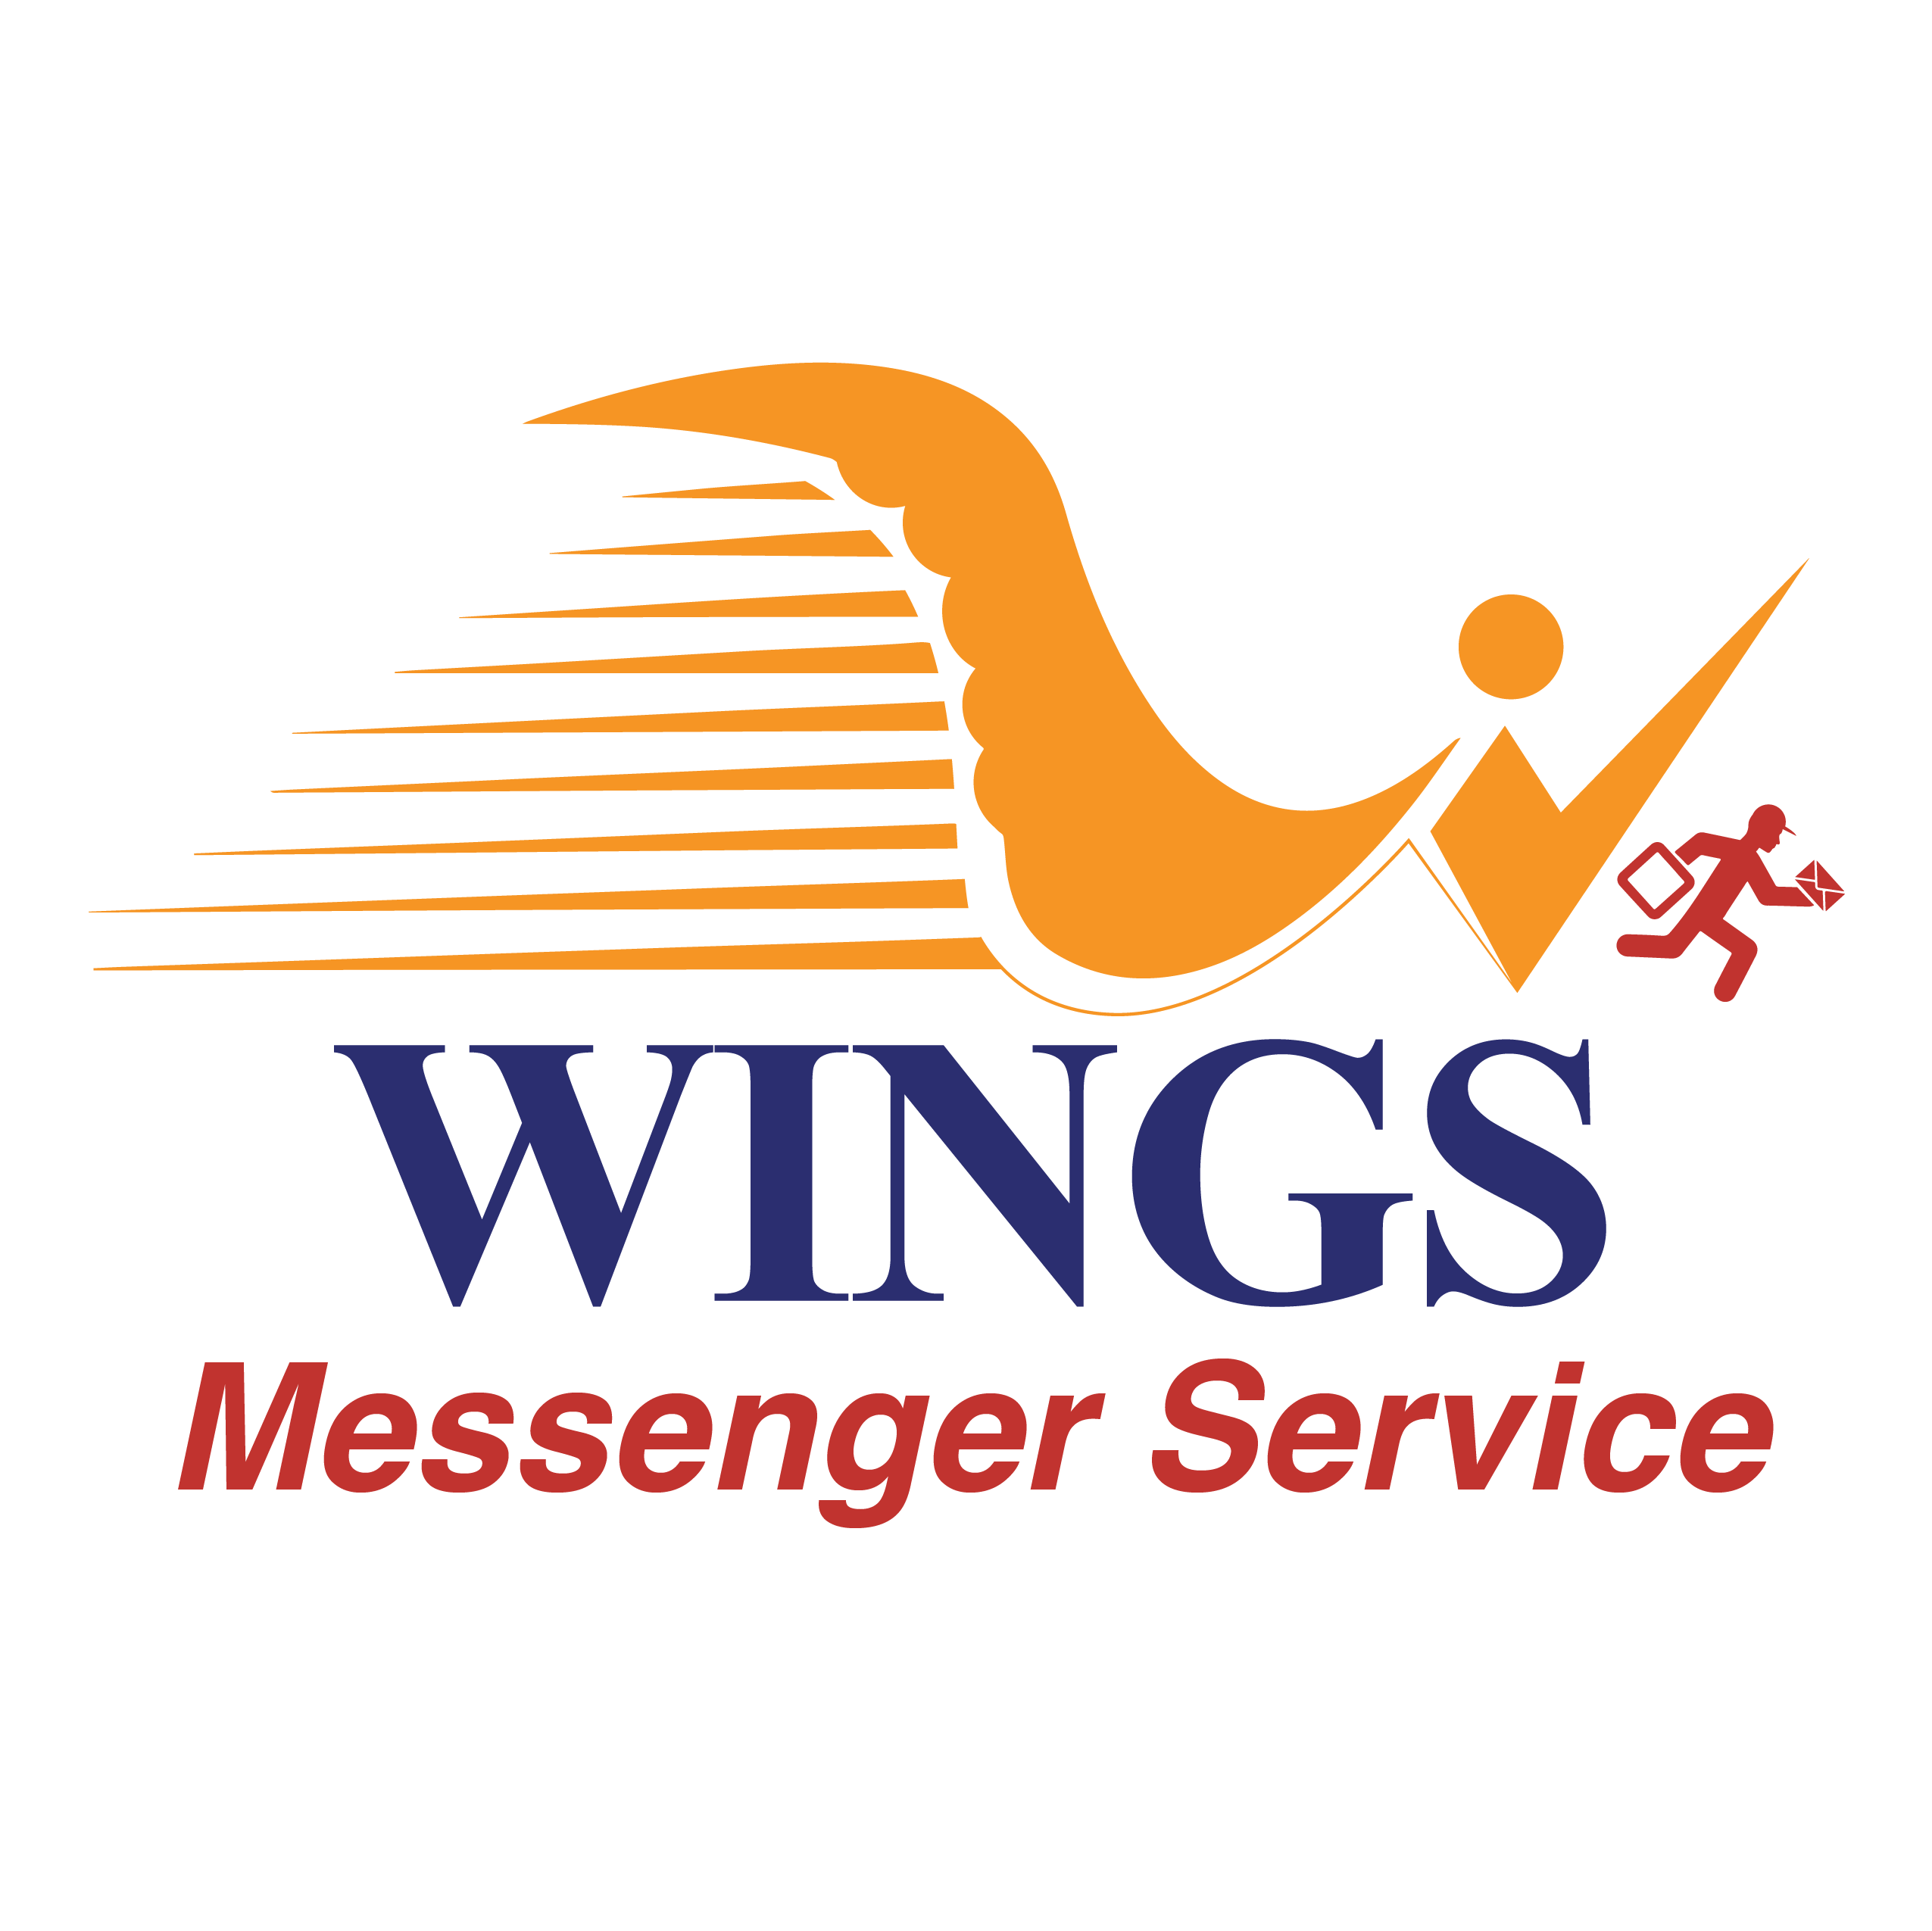 Wings Inc.